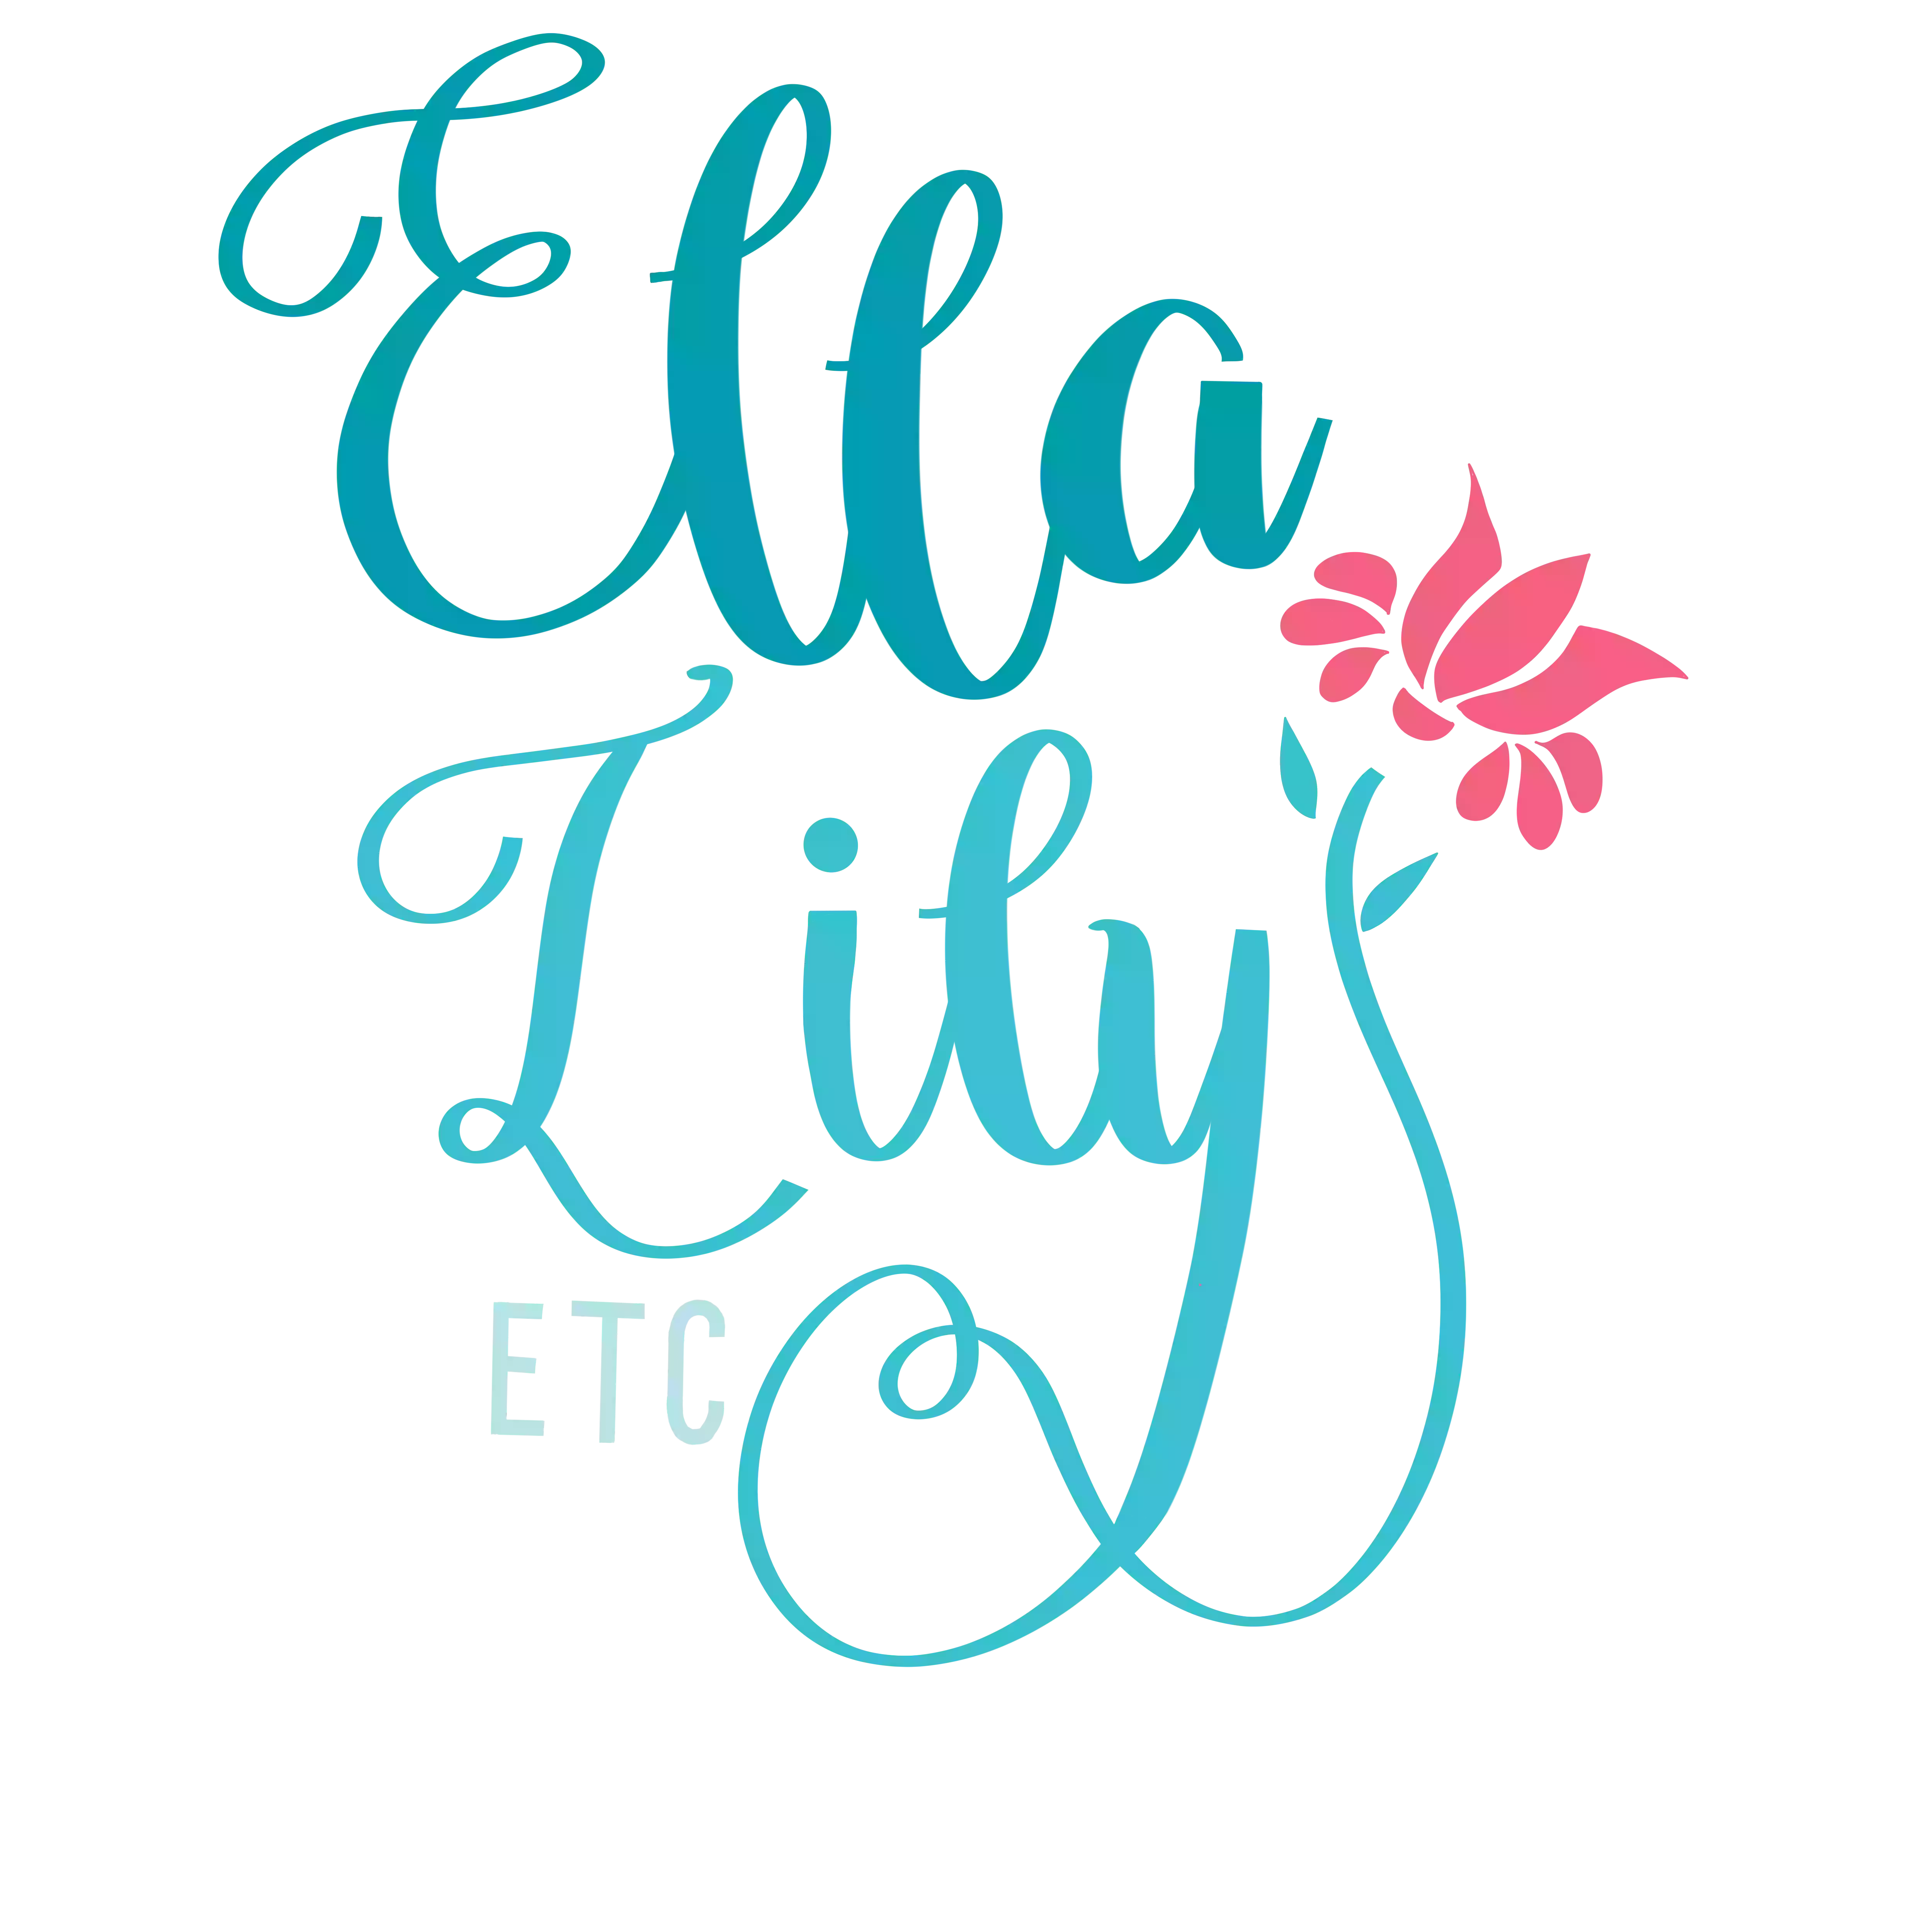 Ella Lily Etc